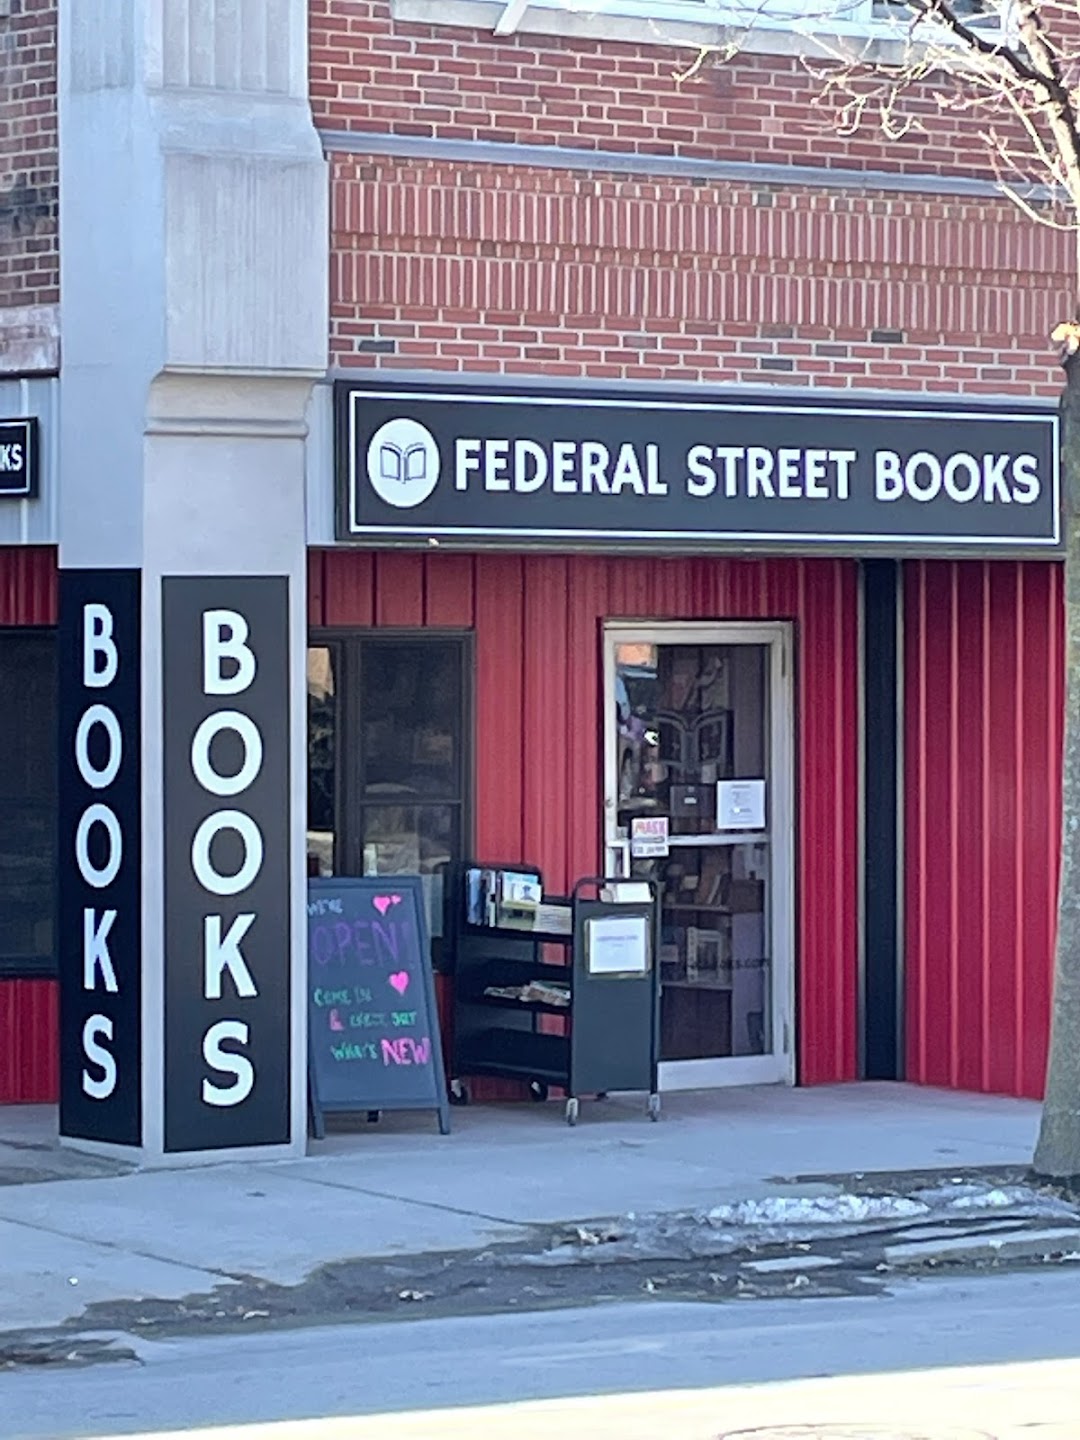 Federal Street Books